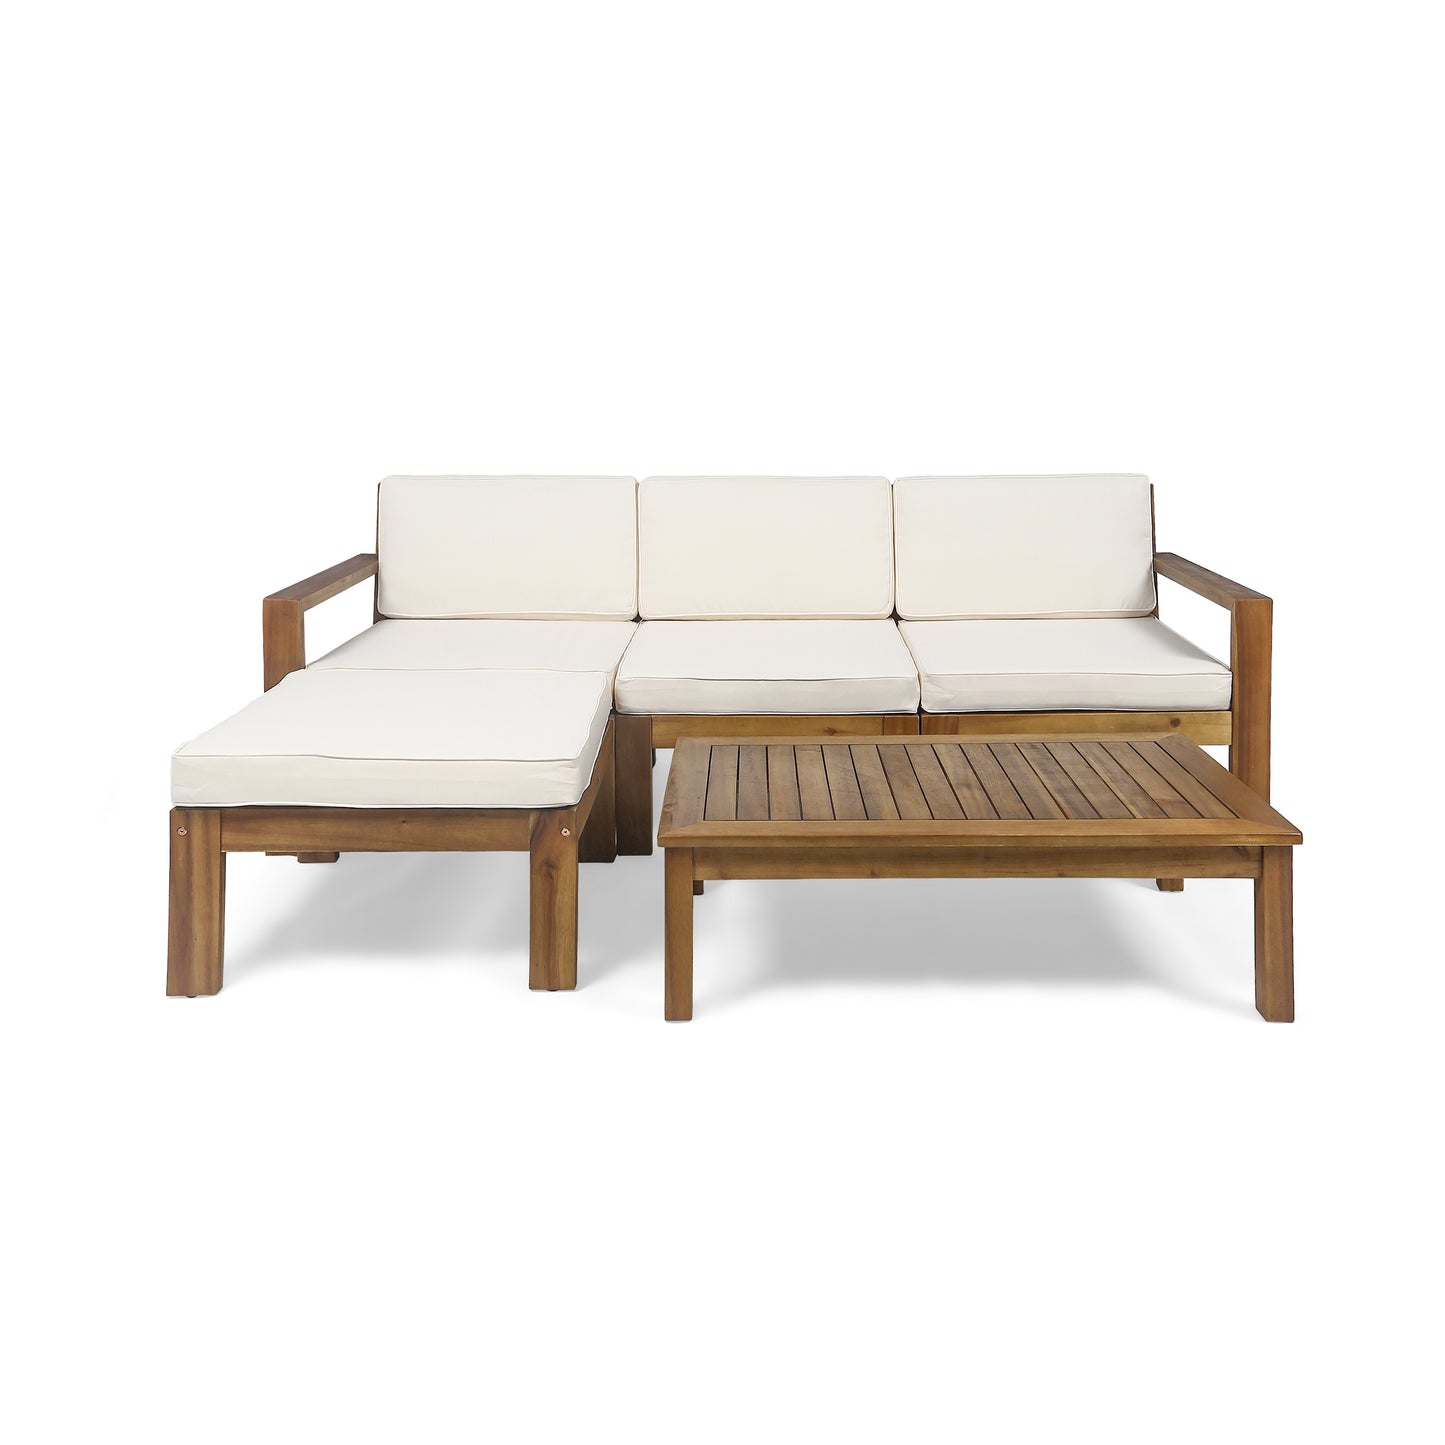 Makayla Ana Outdoor 3 Seater Acacia Wood Sofa Sectional with Cushions